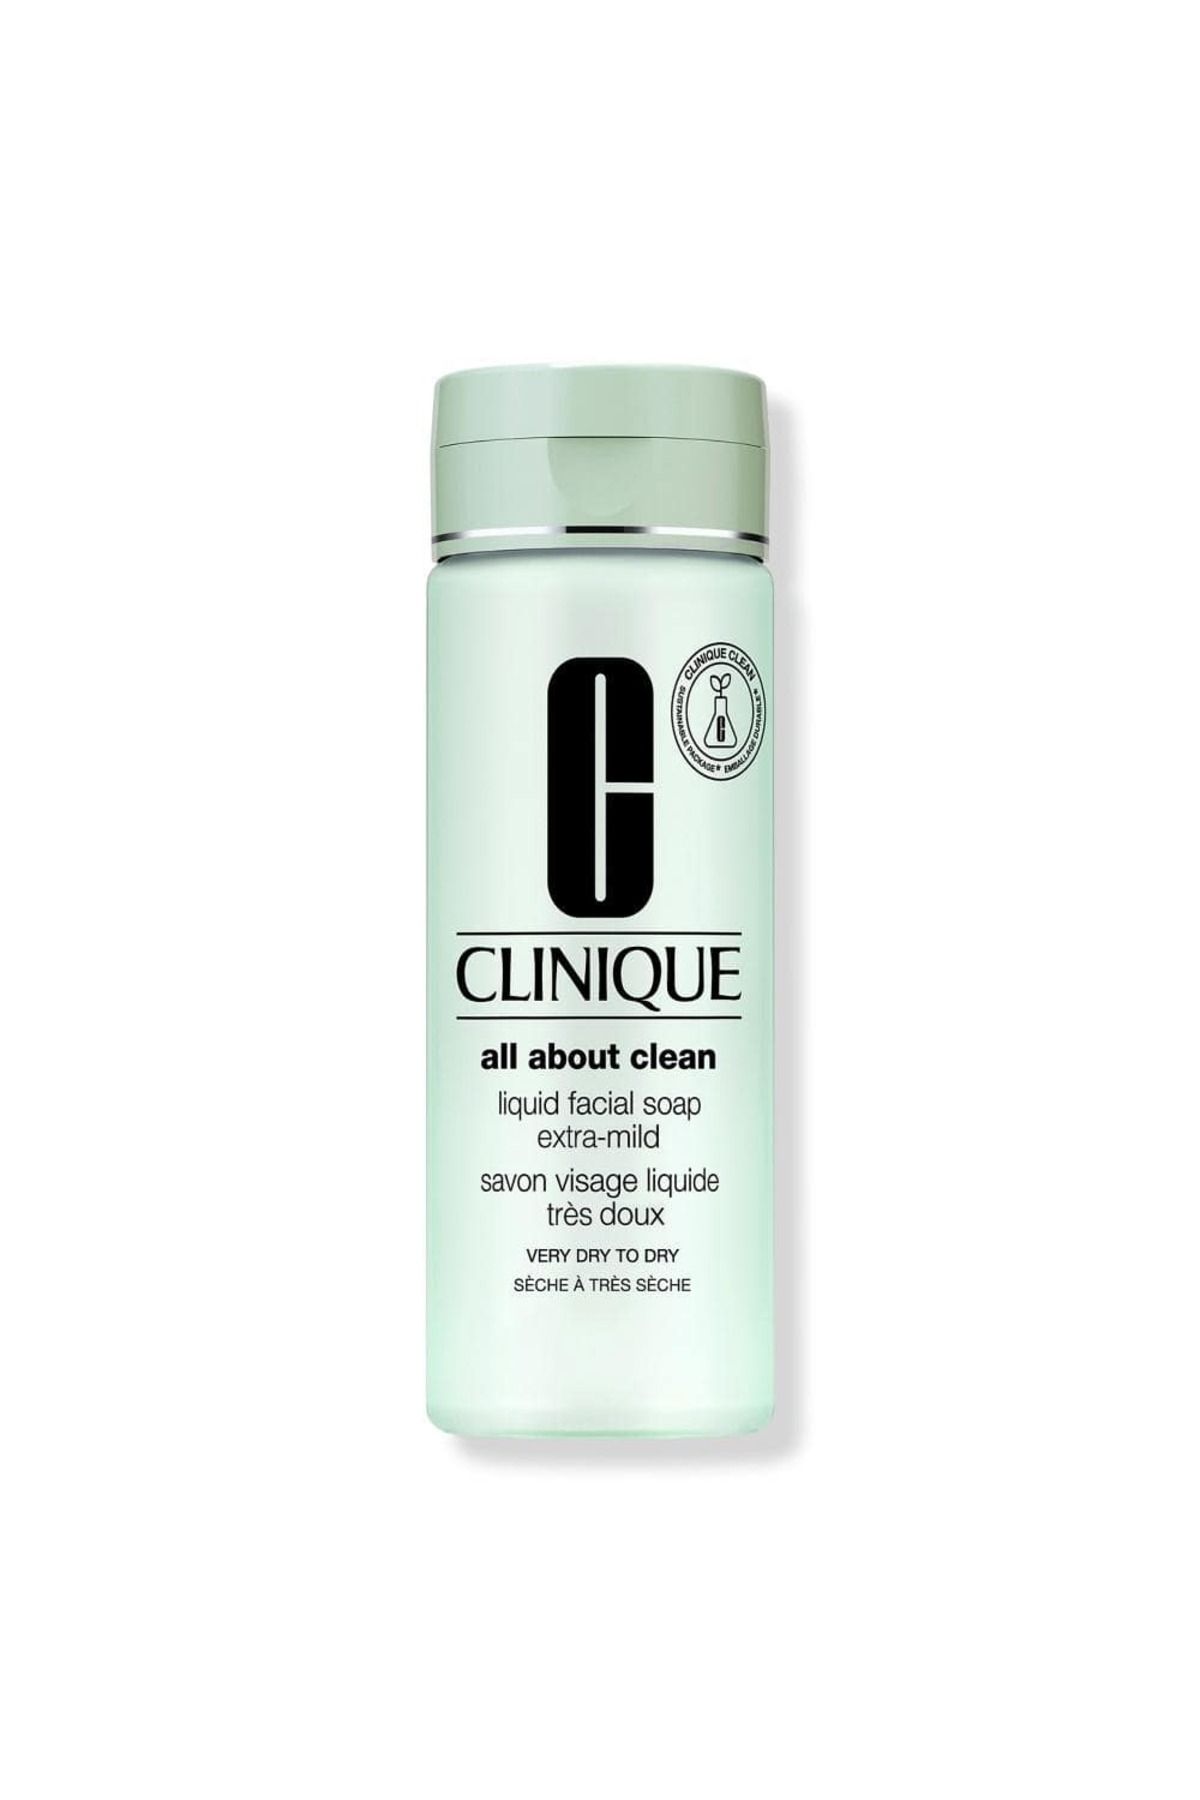 Clinique ژل شستشوی صورت مایع اضافی ملایم تمیزکننده برای پوست خشک و بسیار خشک 200 میلی لیتر